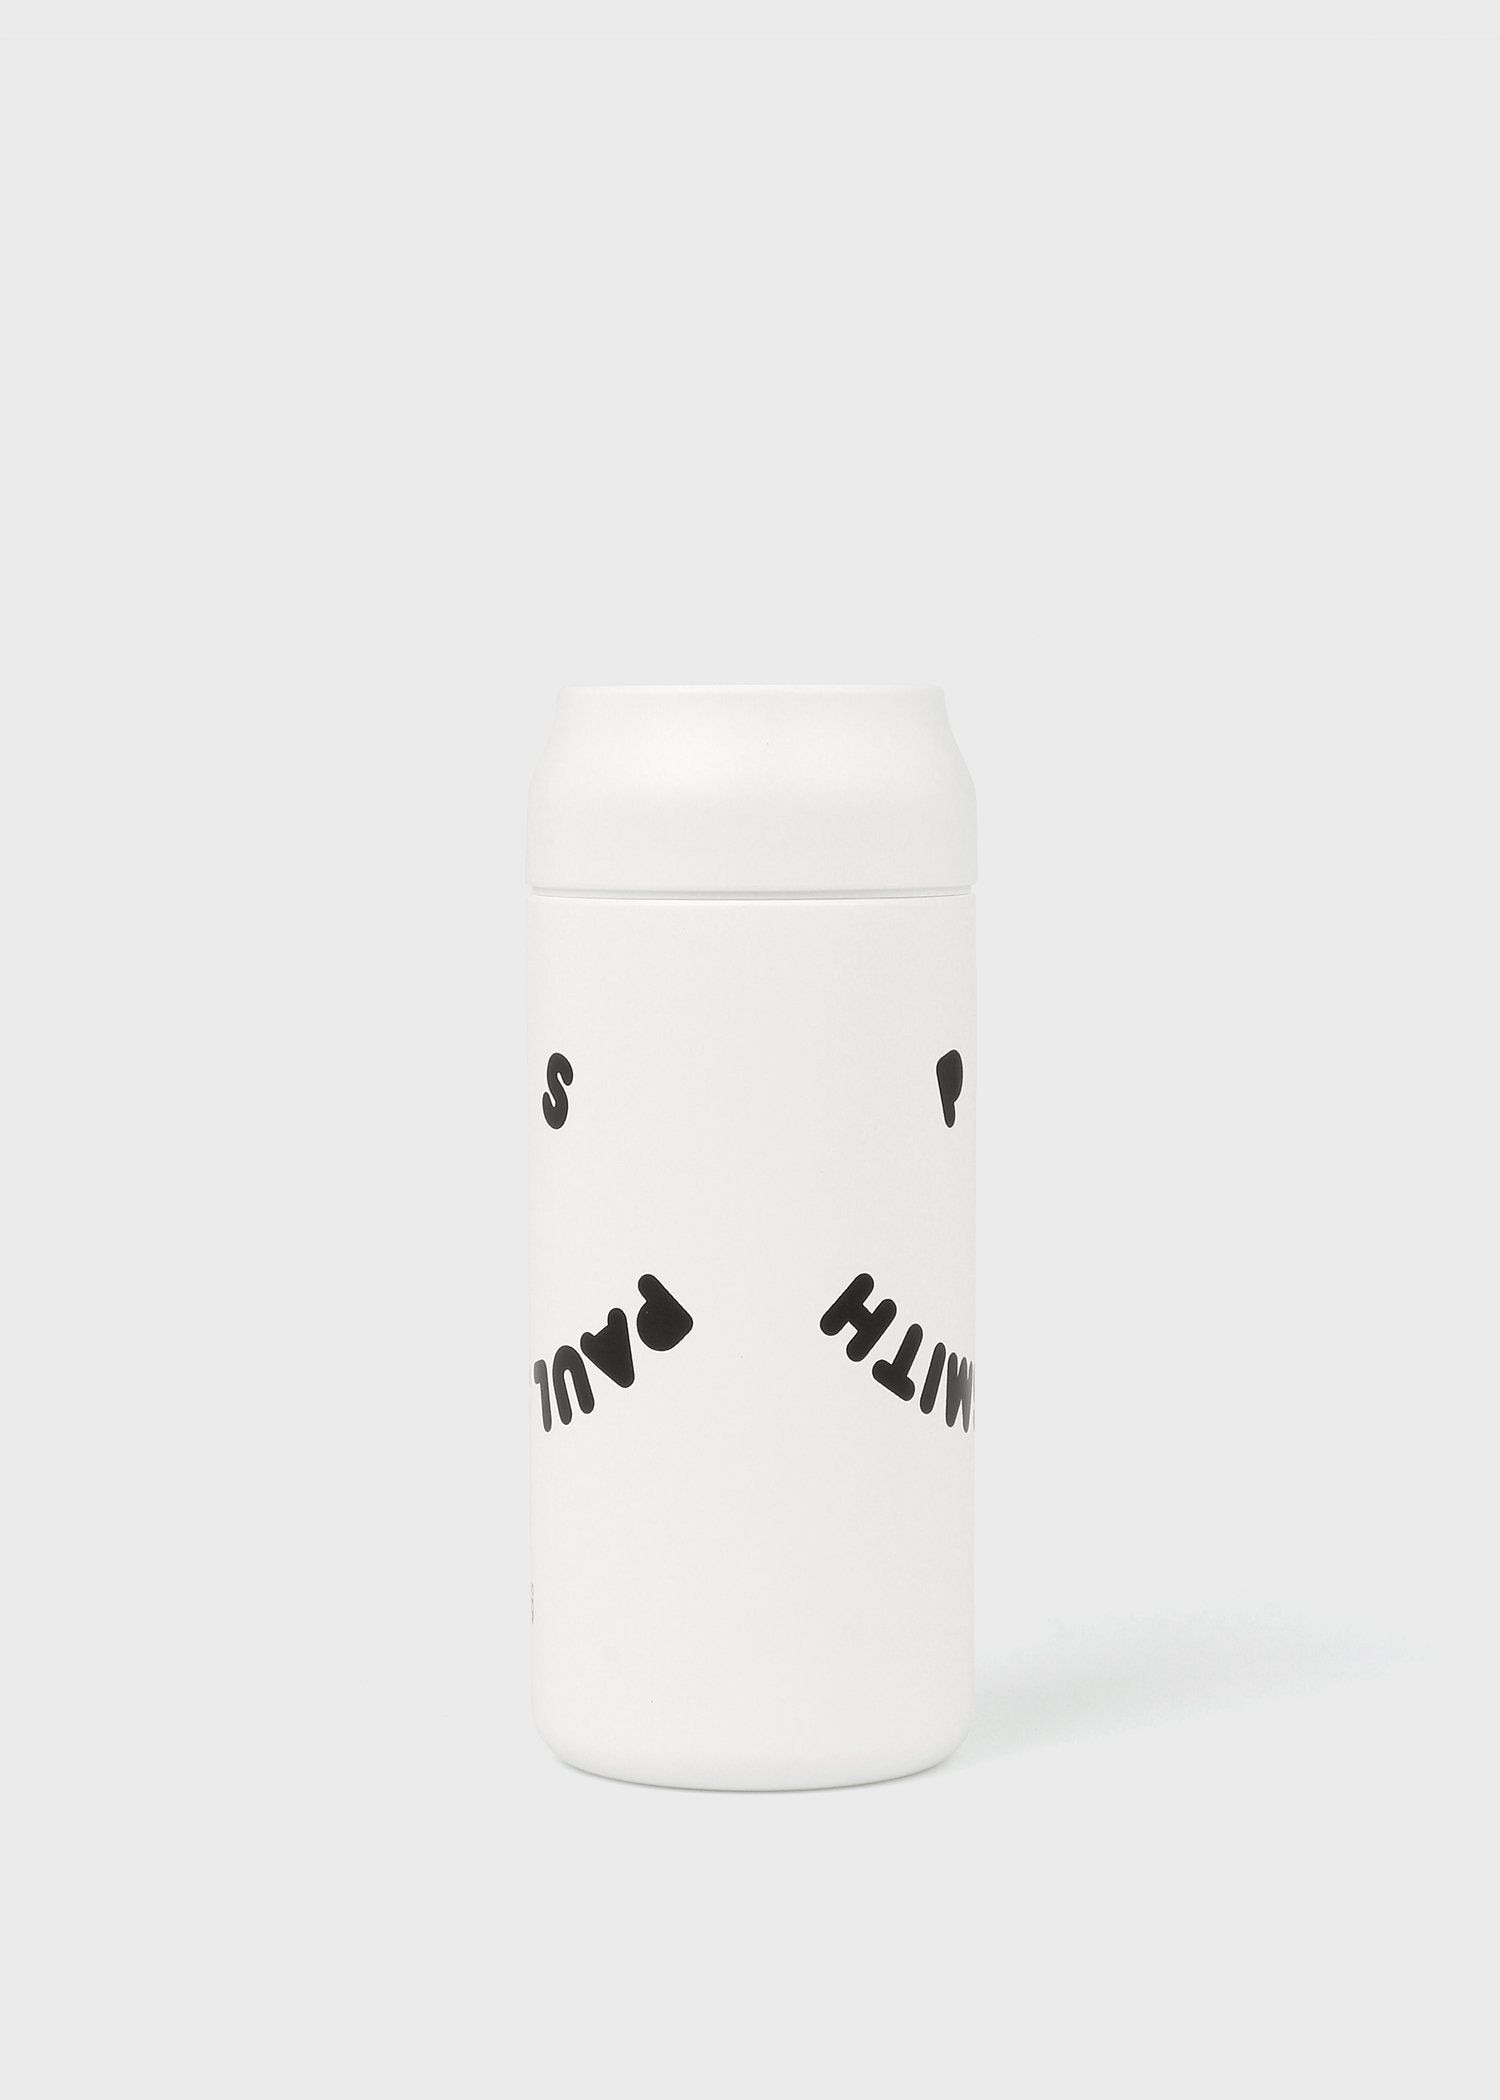 thermo mug × Paul Smith "Happy" オールデイ ボトル